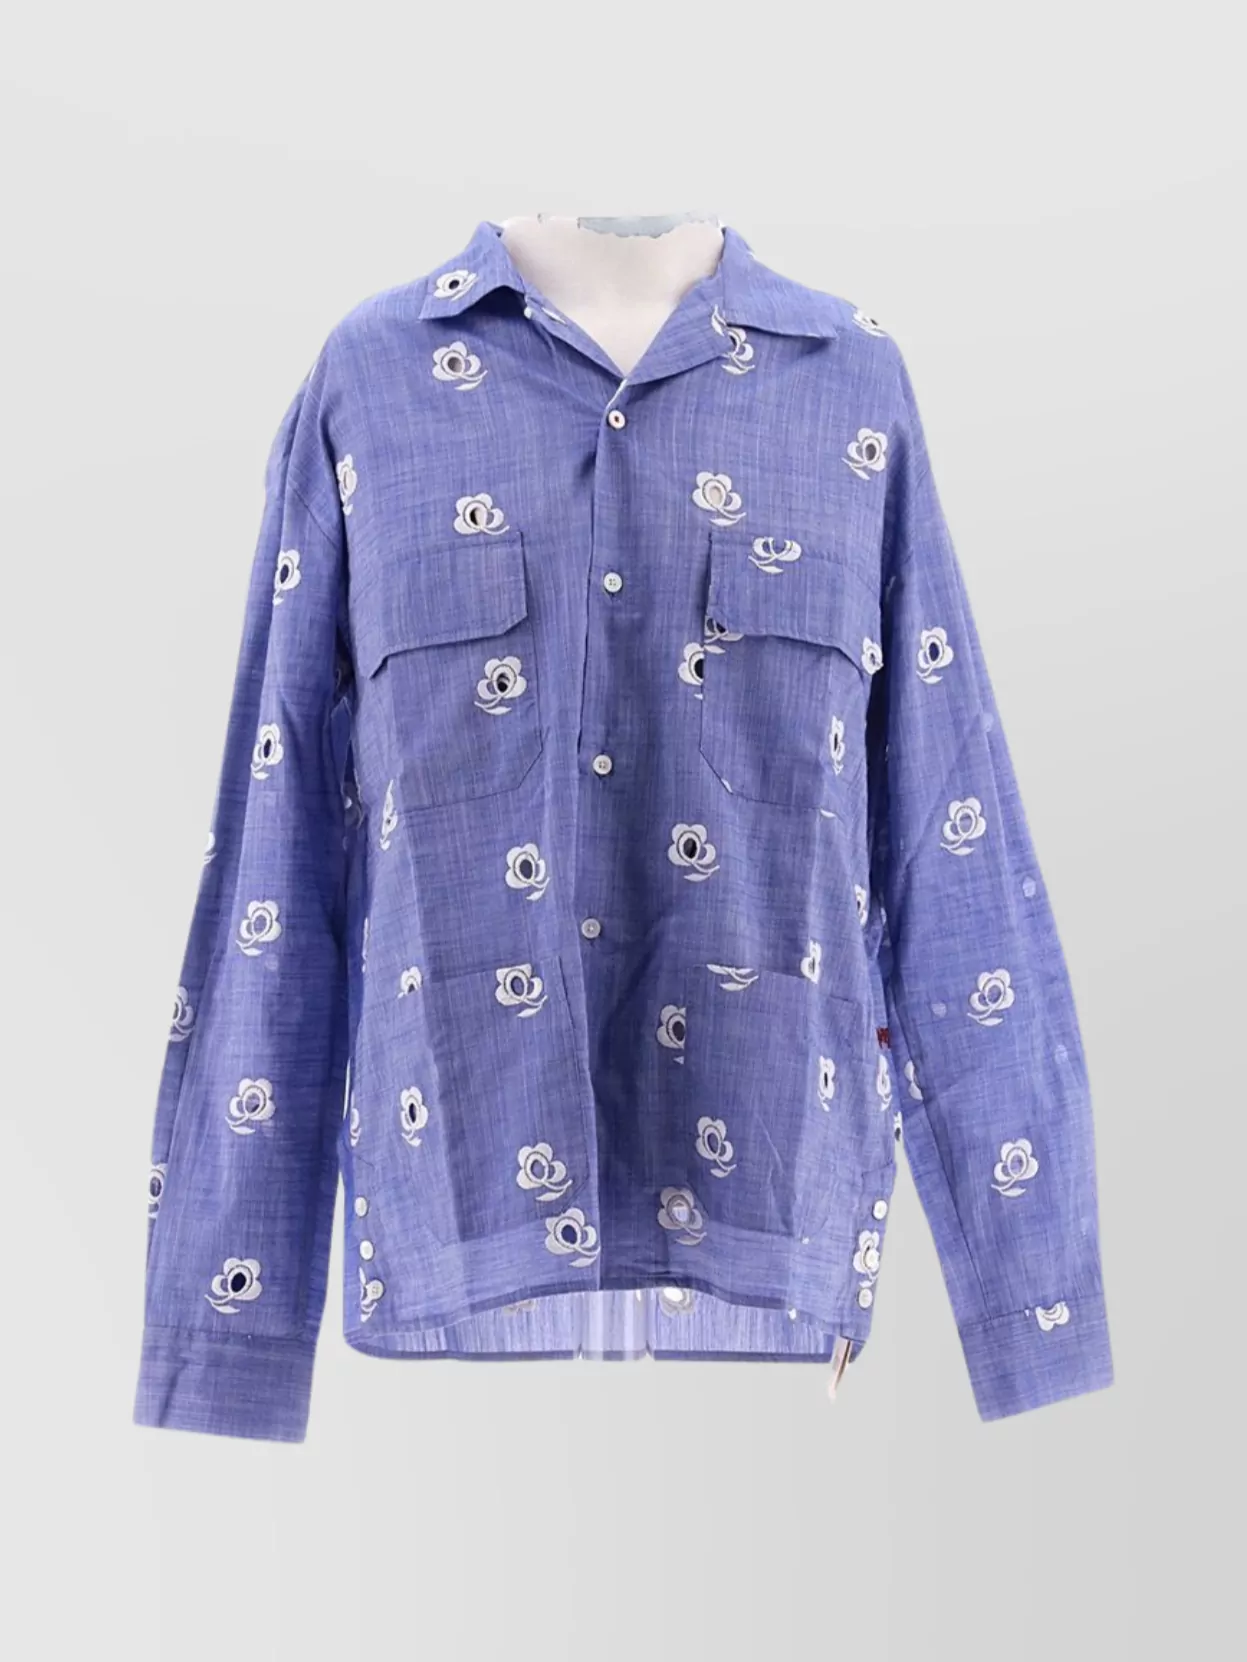 Shop Baziszt Shirt Chest Pockets Cuffed Sleeves Floral Pattern